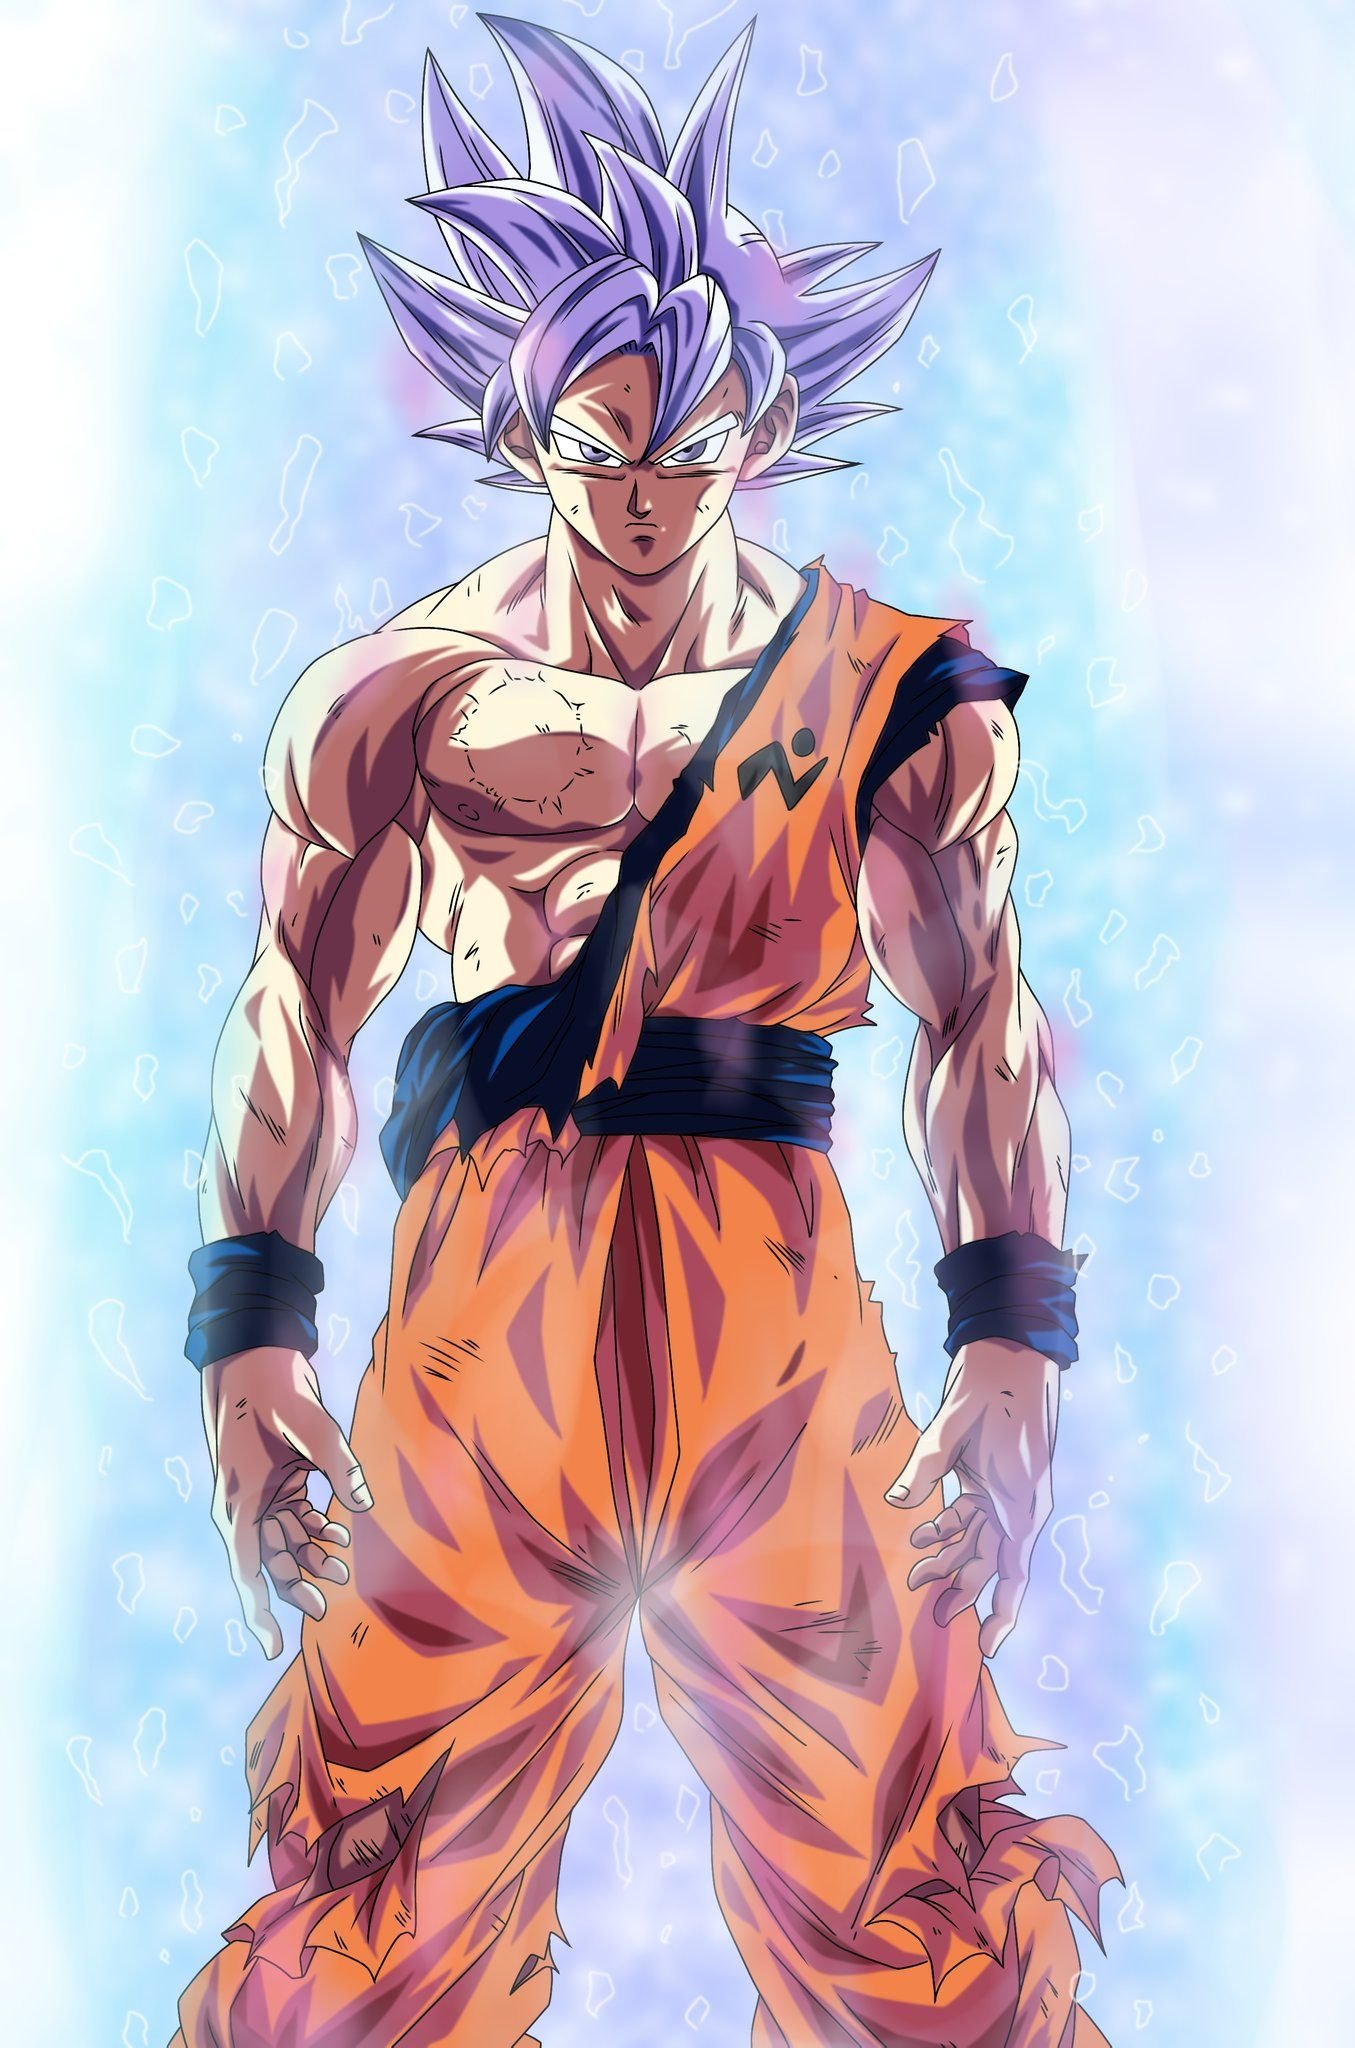 Goku Wallpaper IOS Download